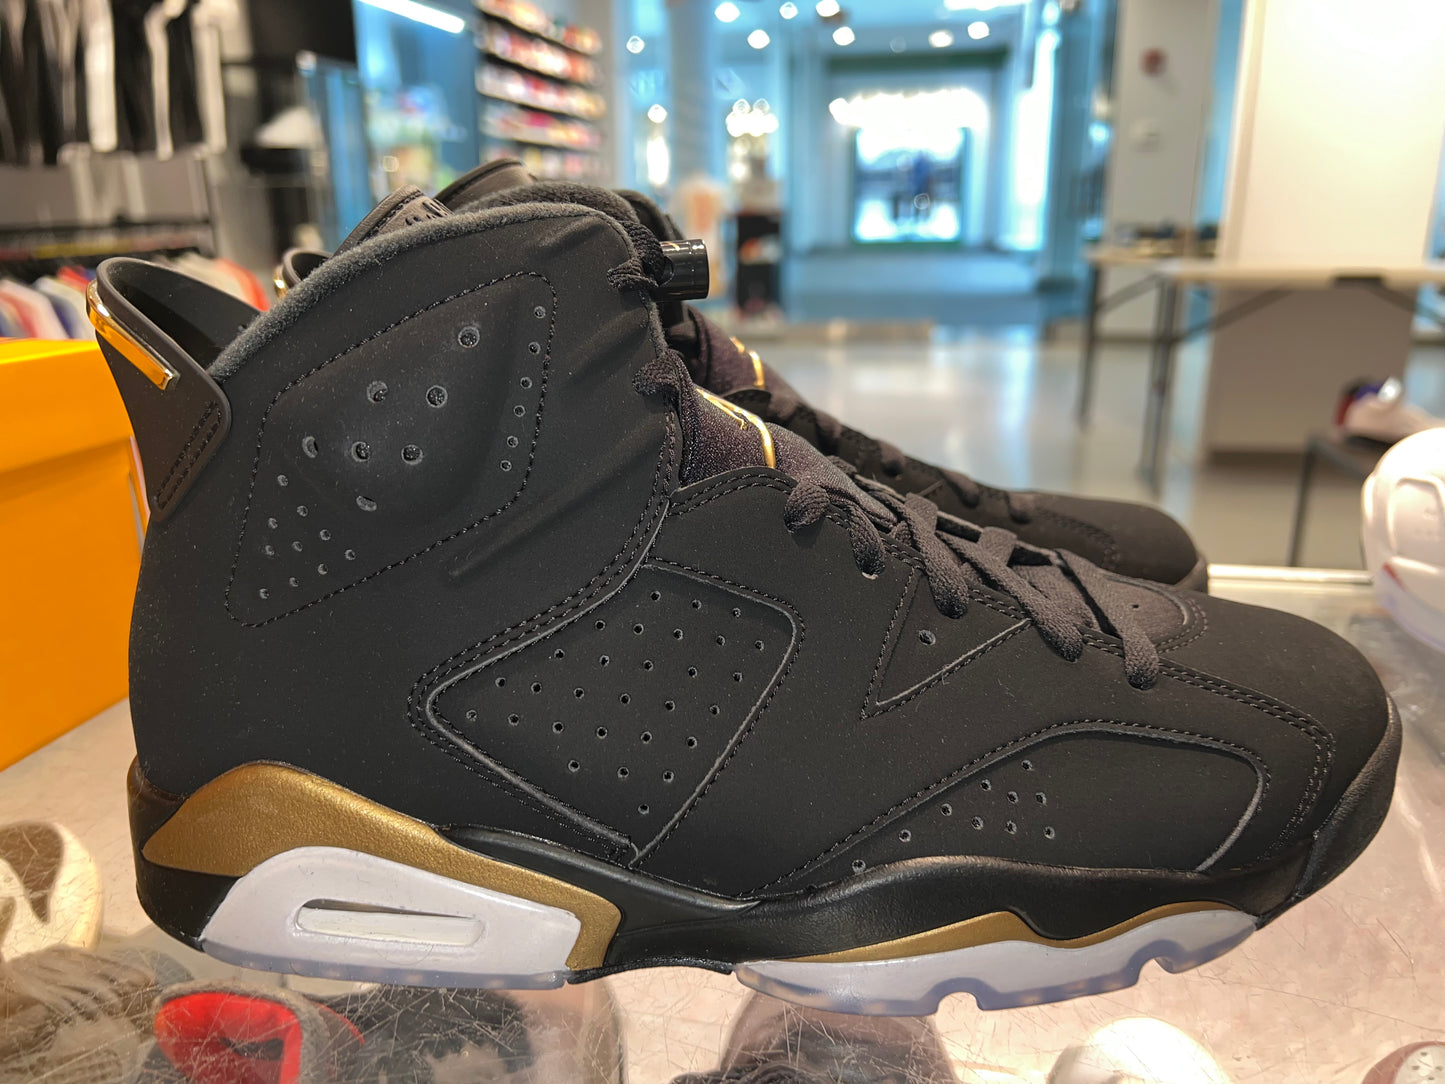 Size 9 Air Jordan 6 “DMP” Brand New (Mall)